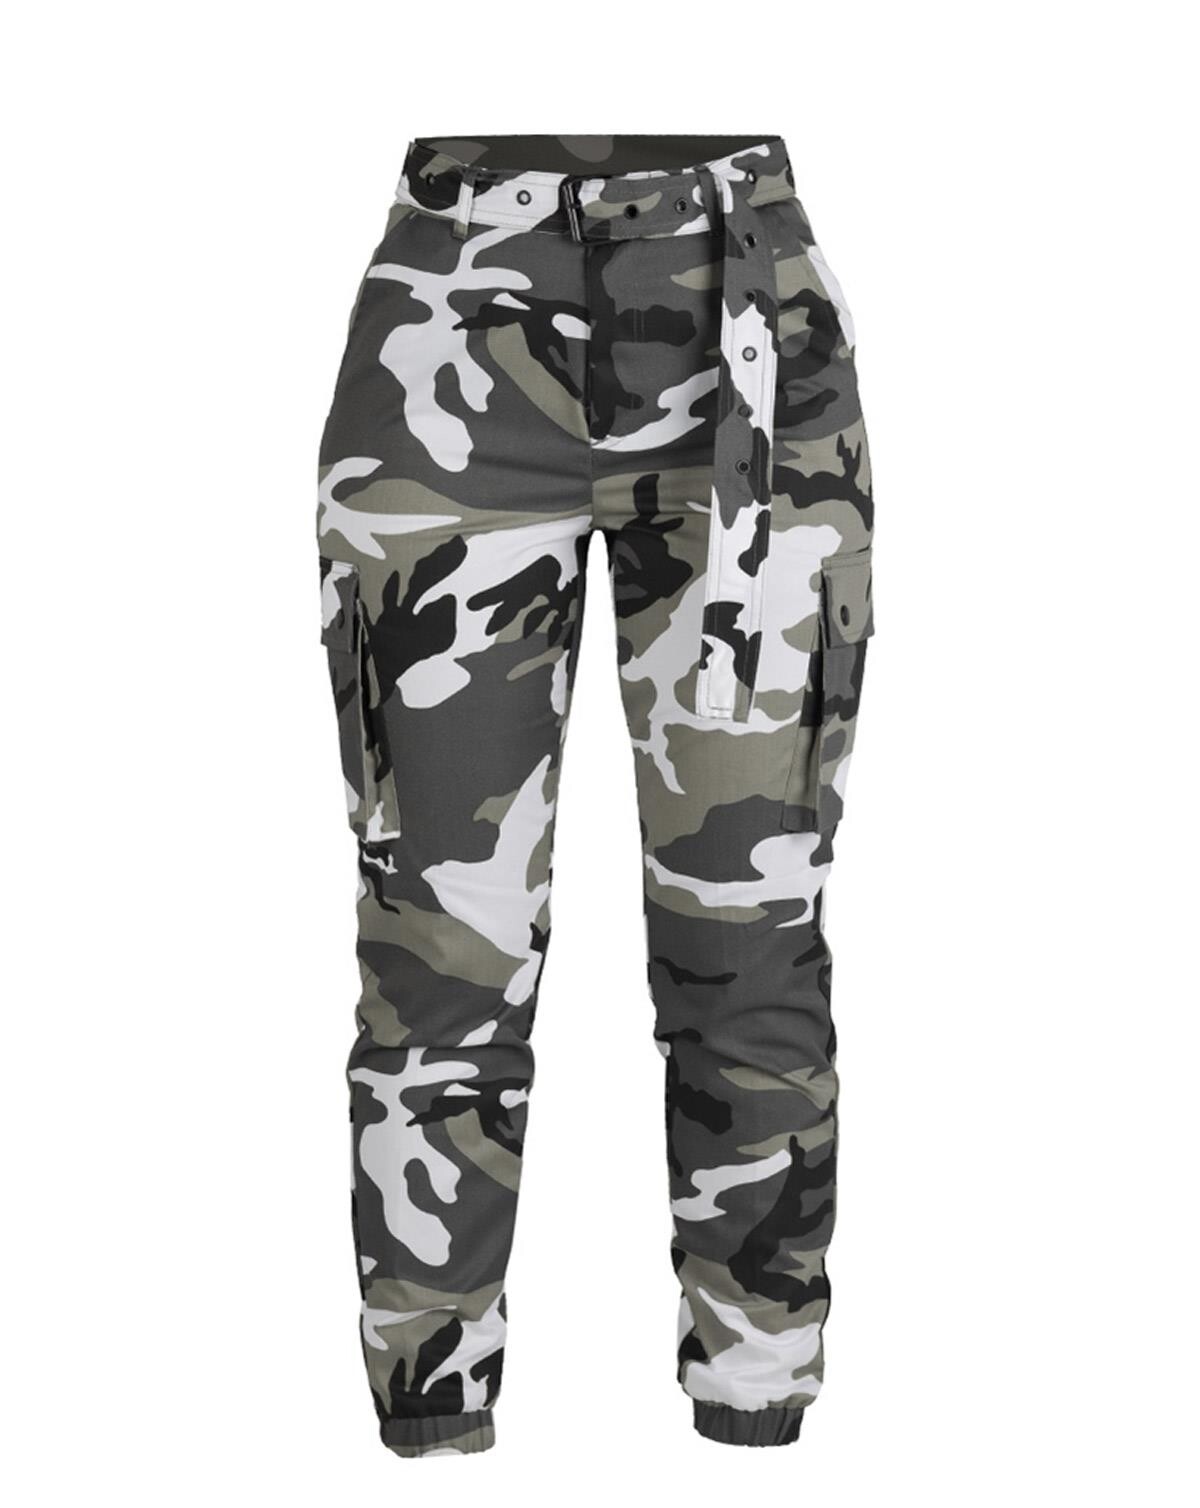 Mil-Tec Army Pants for Women (Urban Camo, L)